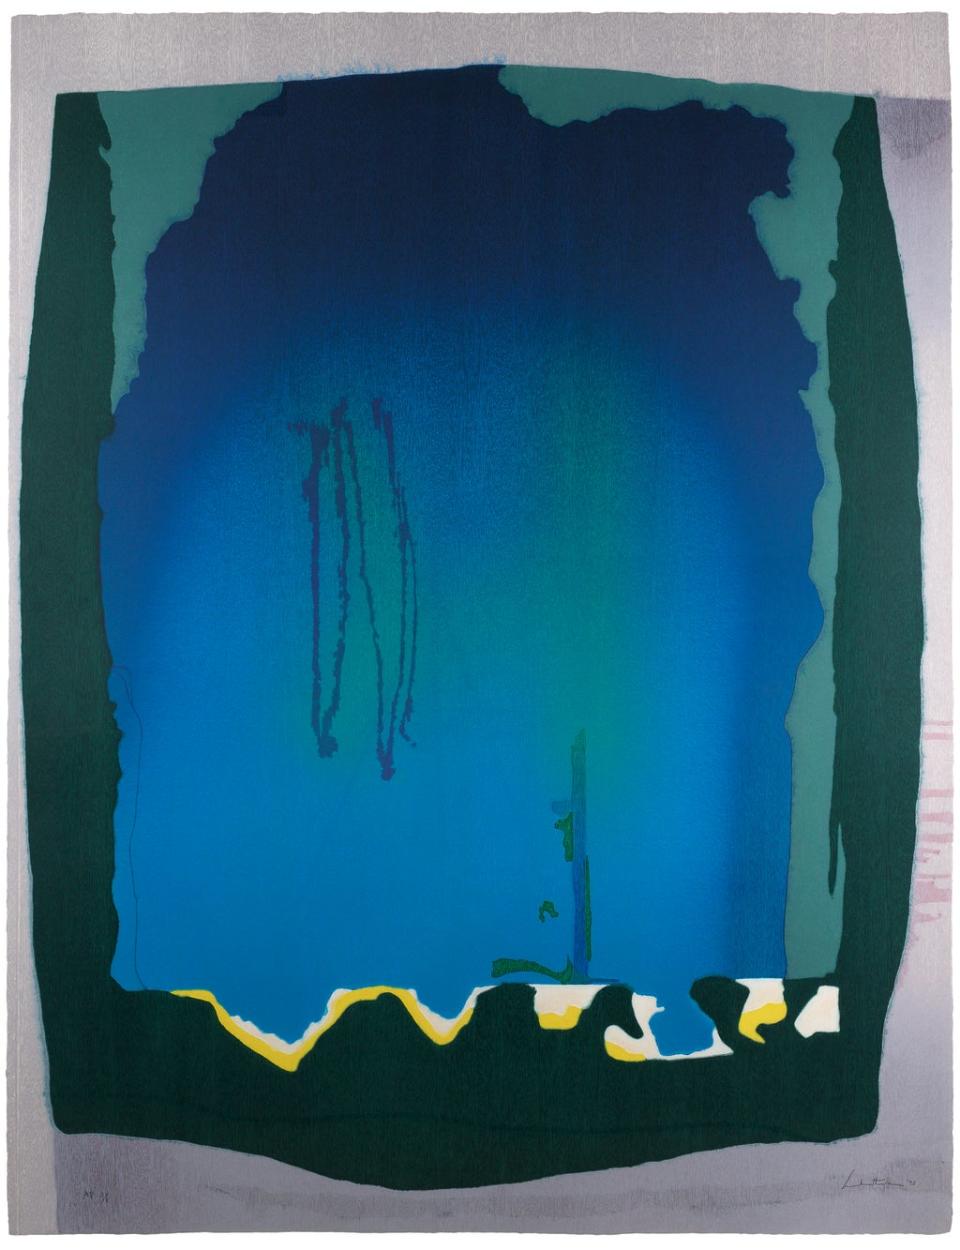 Helen Frankenthaler, Freefall, 1993. Twelve color woodcut on hand-dyed paper in 15 colors (© 2021 Helen Frankenthaler Foundation, Inc. / ARS, NY and DACS, London / Tyler Graphics Ltd., Mount Kisco, NY)